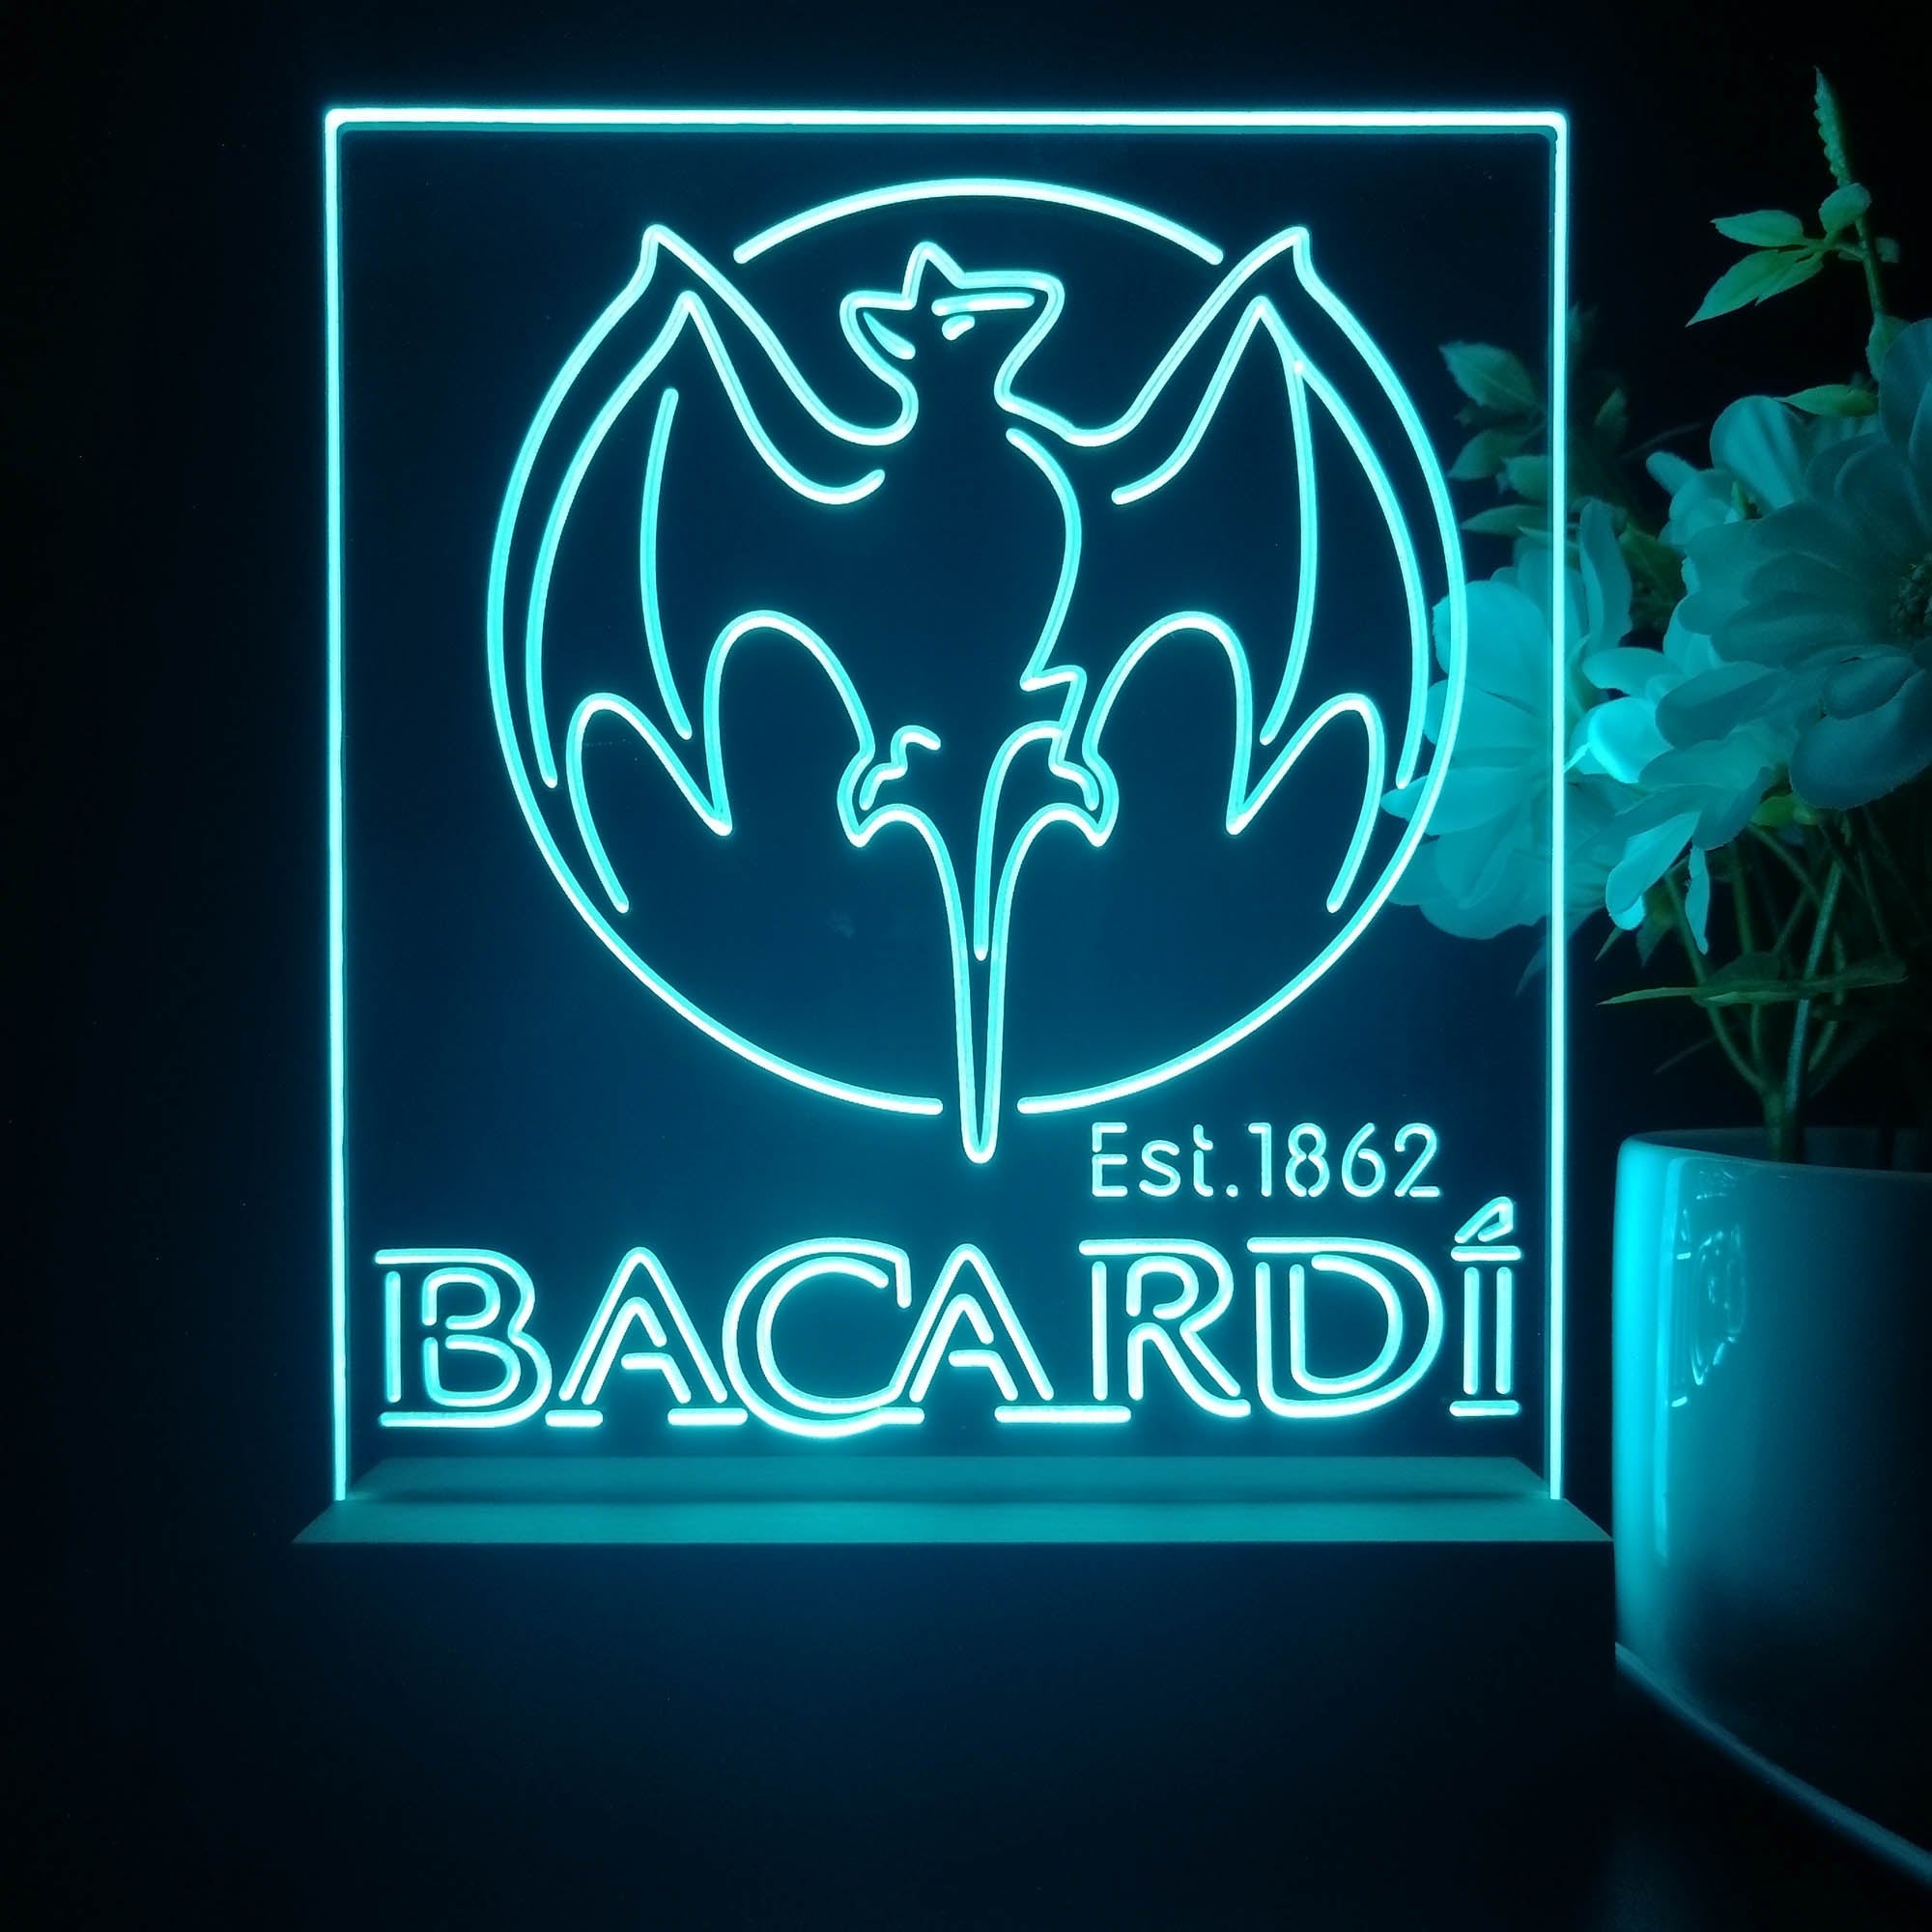 Bacardi Bat Est. 1862 3D Illusion Night Light Desk Lamp